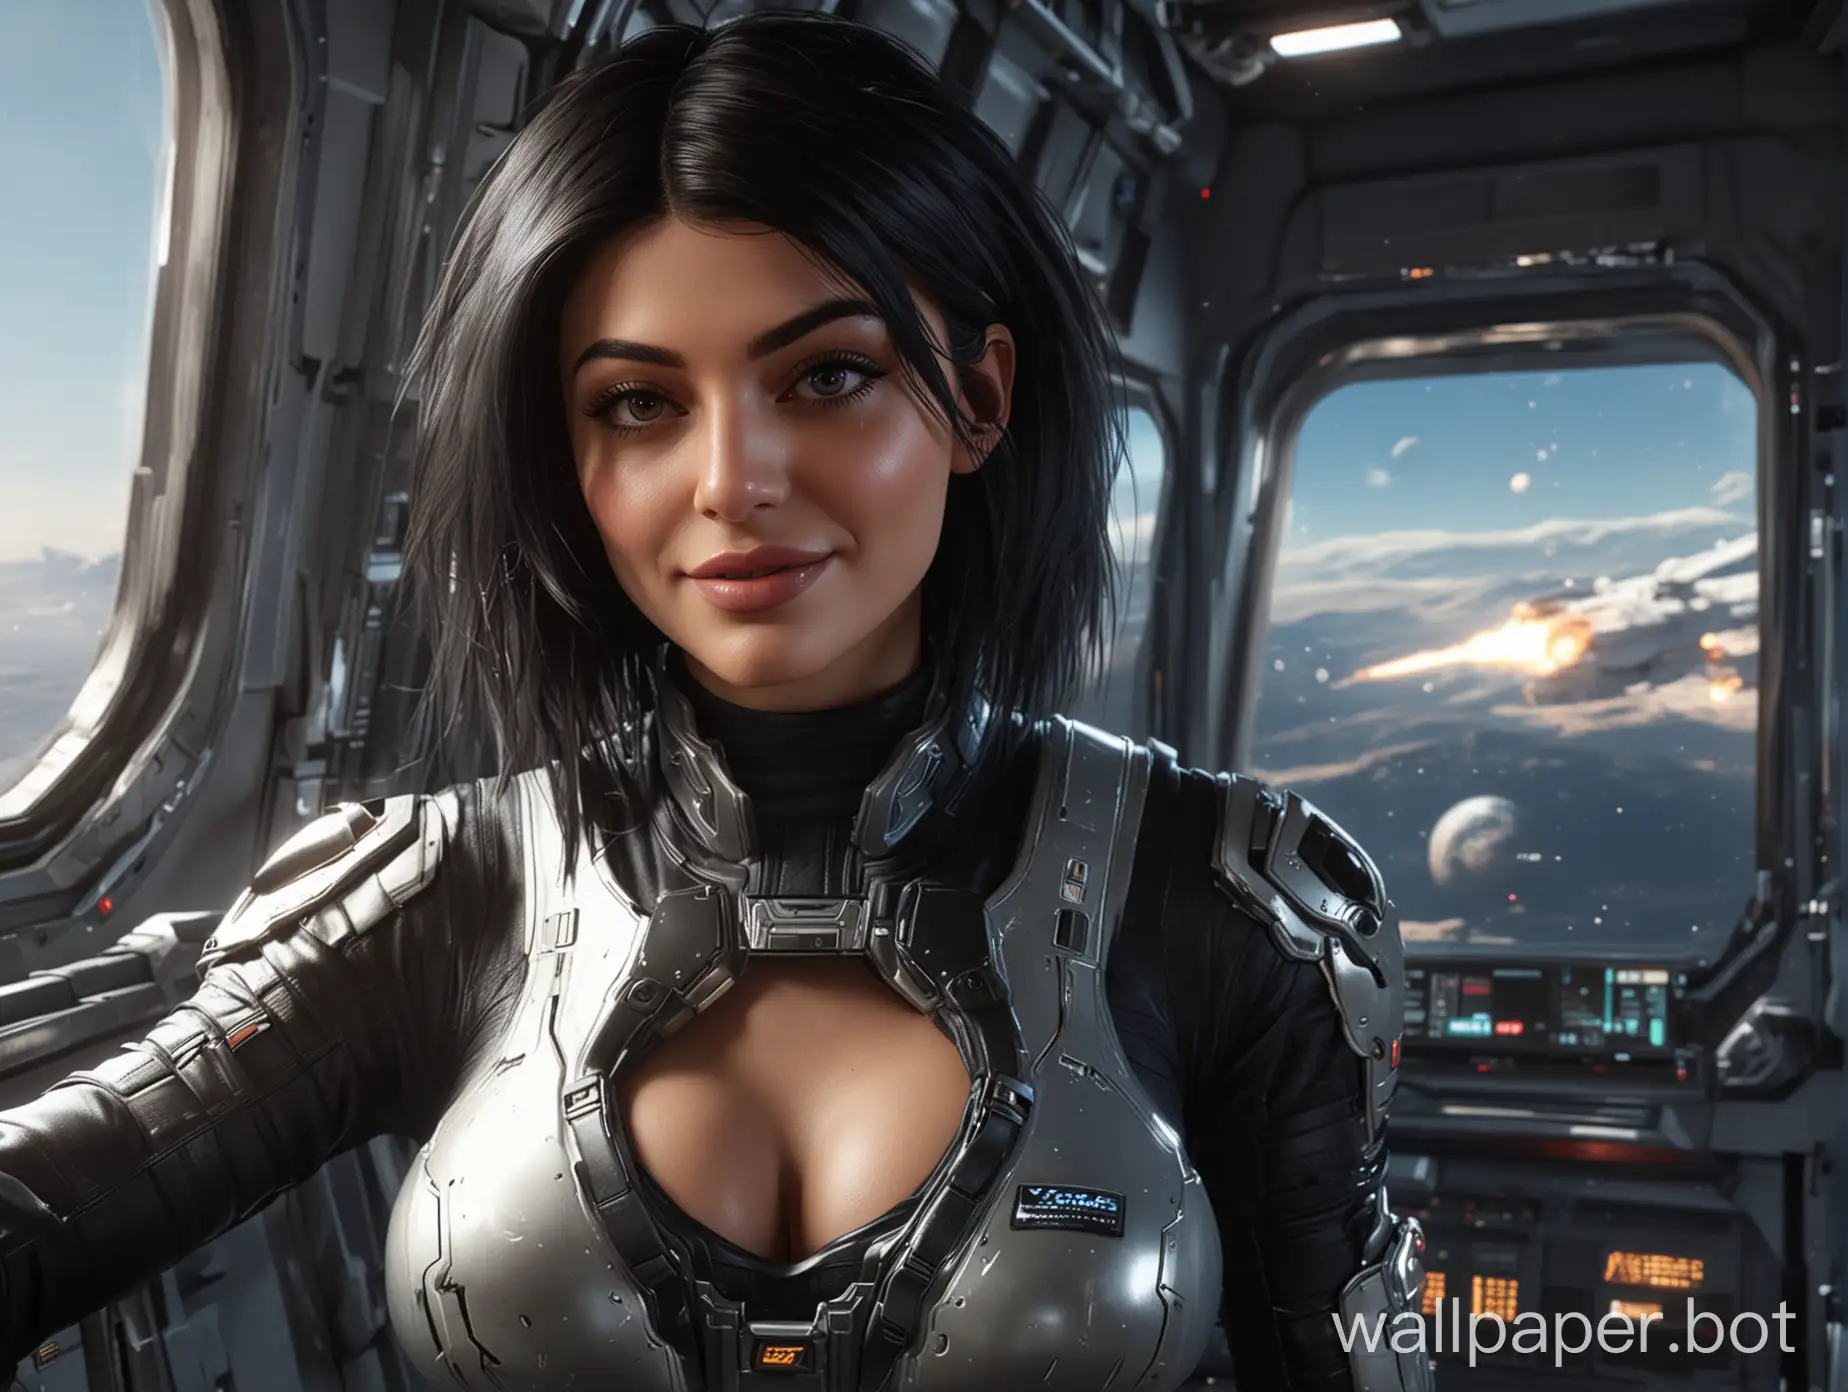 Futuristic-Female-Pilot-Selfie-in-Spacecraft-Cockpit